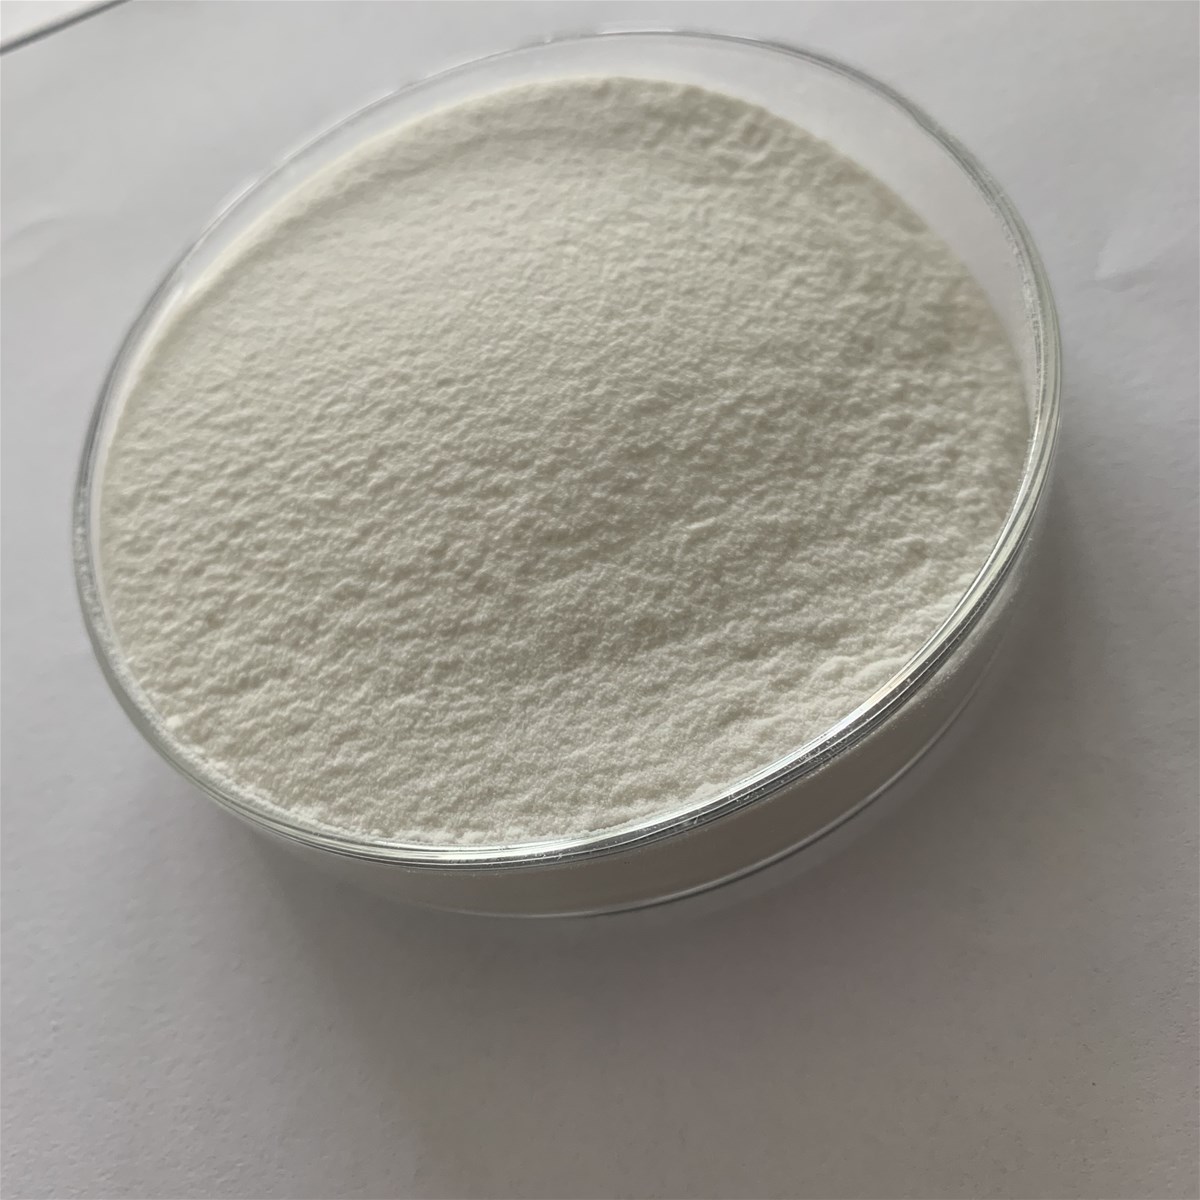 Milk additiveSodium Carboxymethyl Cellulose Food gradecmc for milk